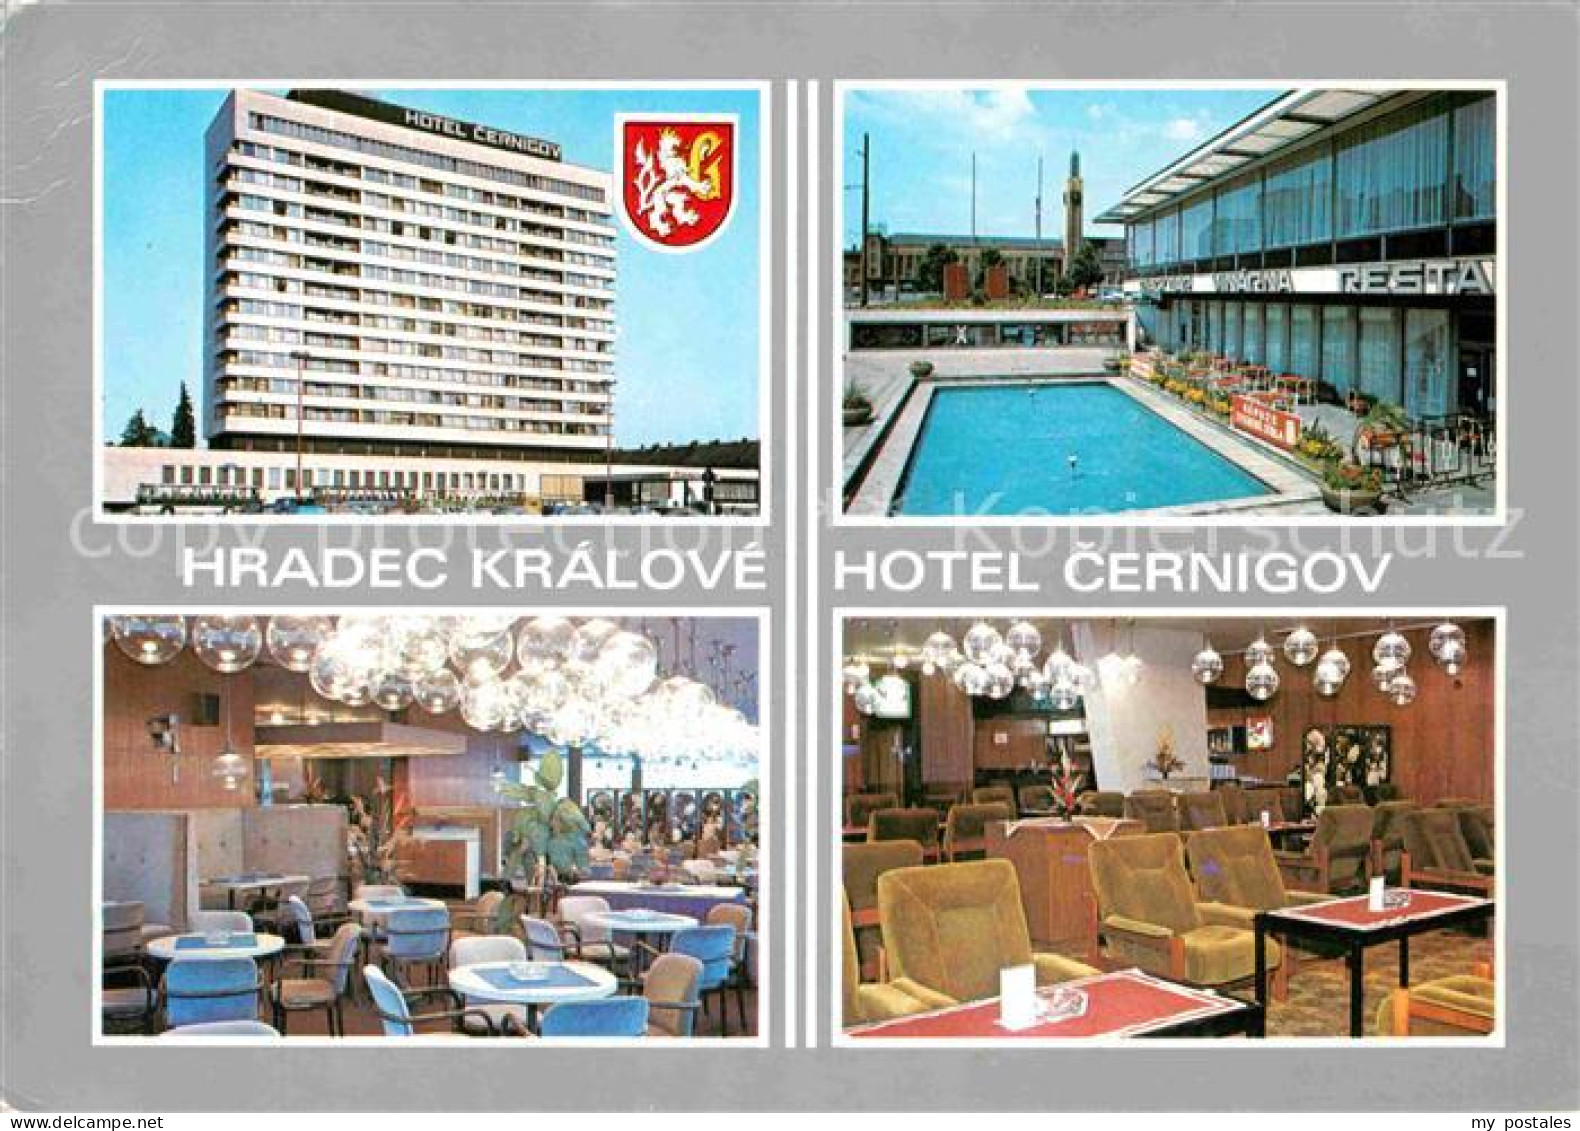 72844014 Kralovehradecko Hradec Kralove Hotel Cernigov  - Czech Republic